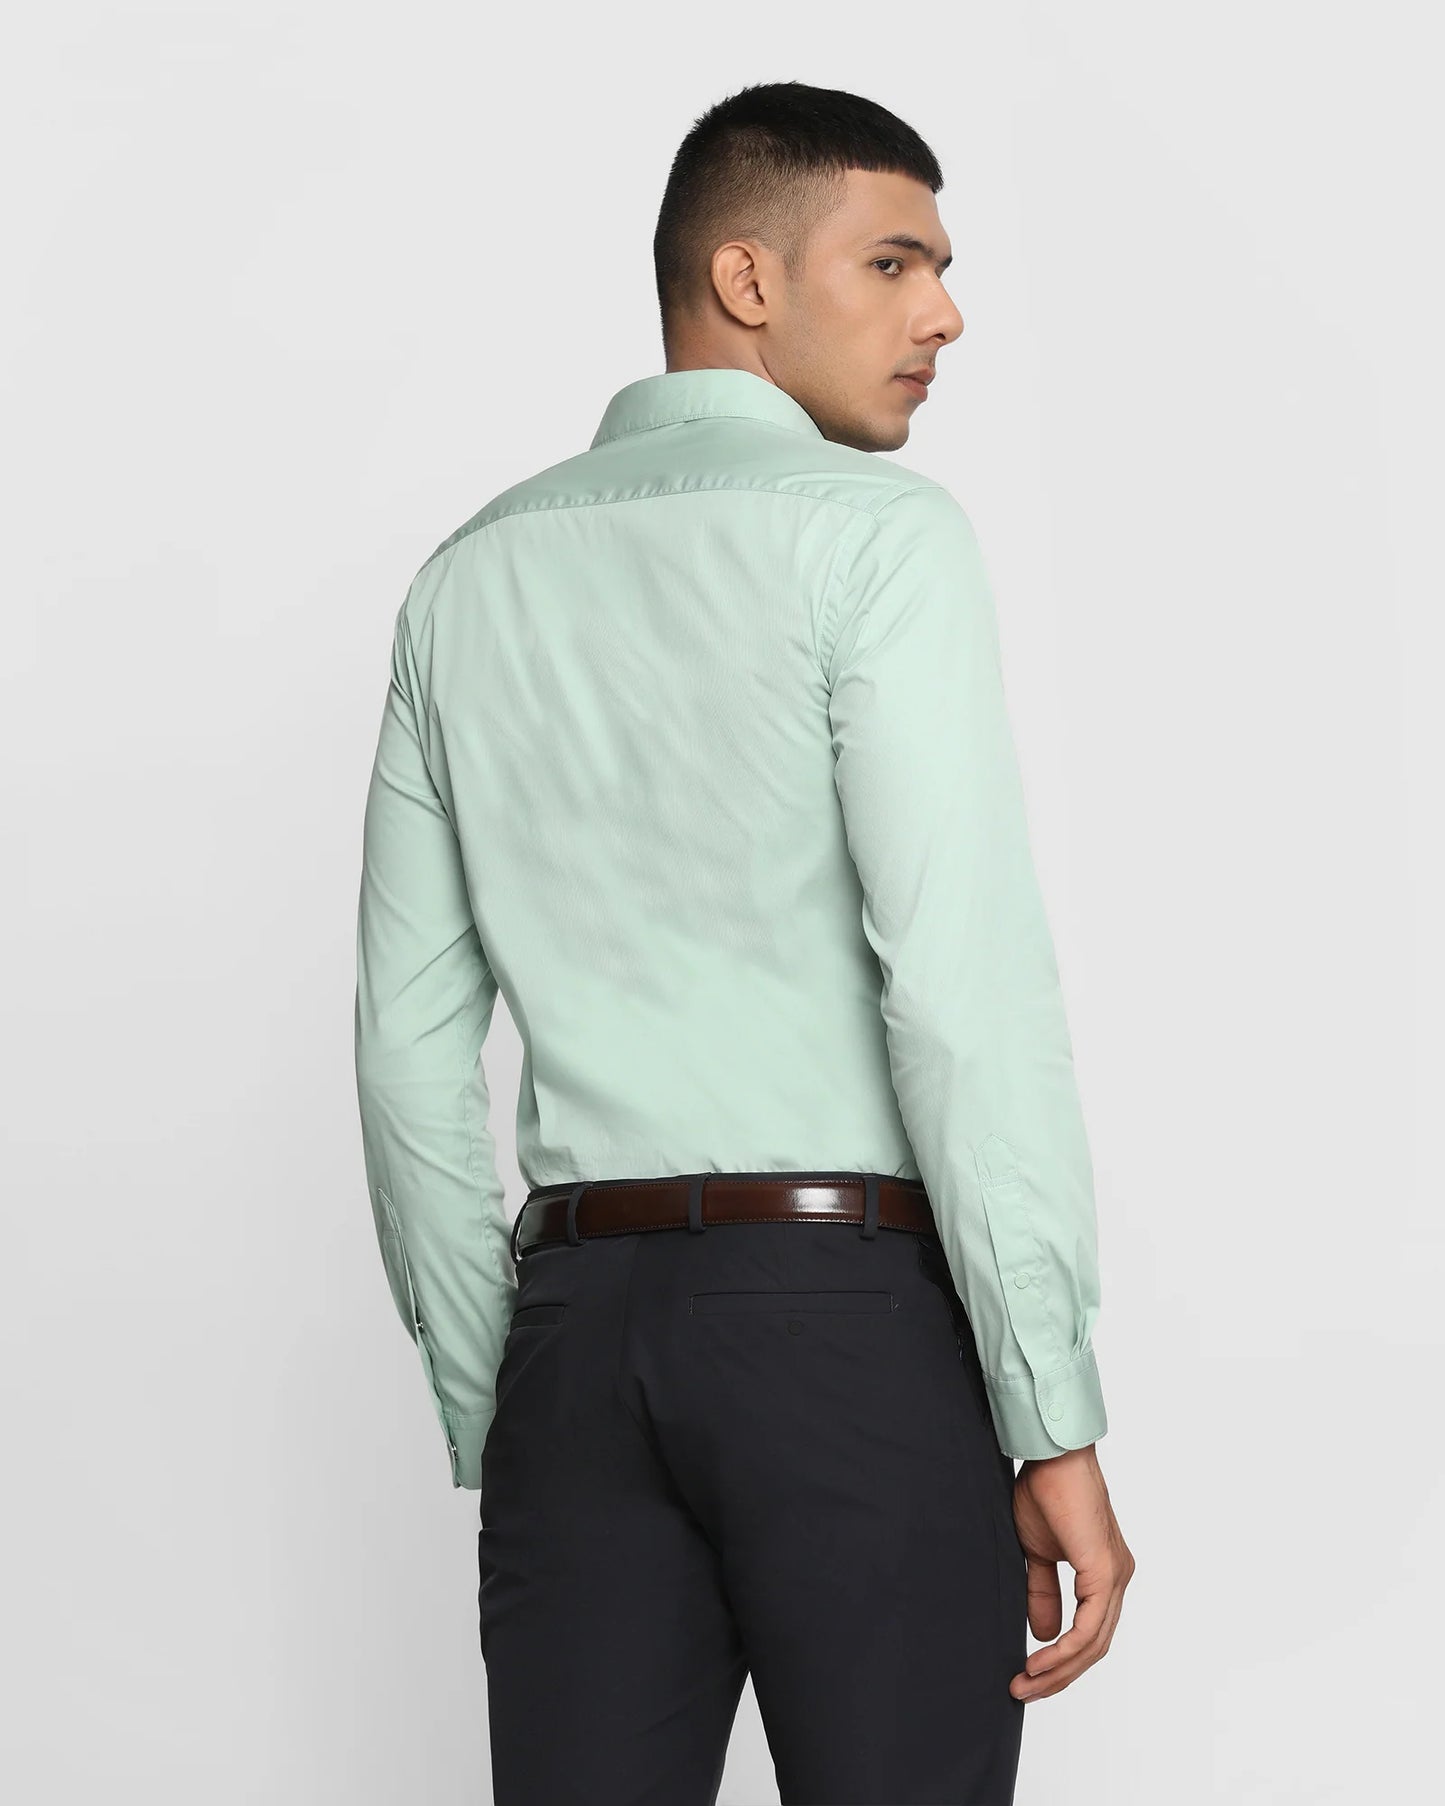 Solid formal shirt in light green